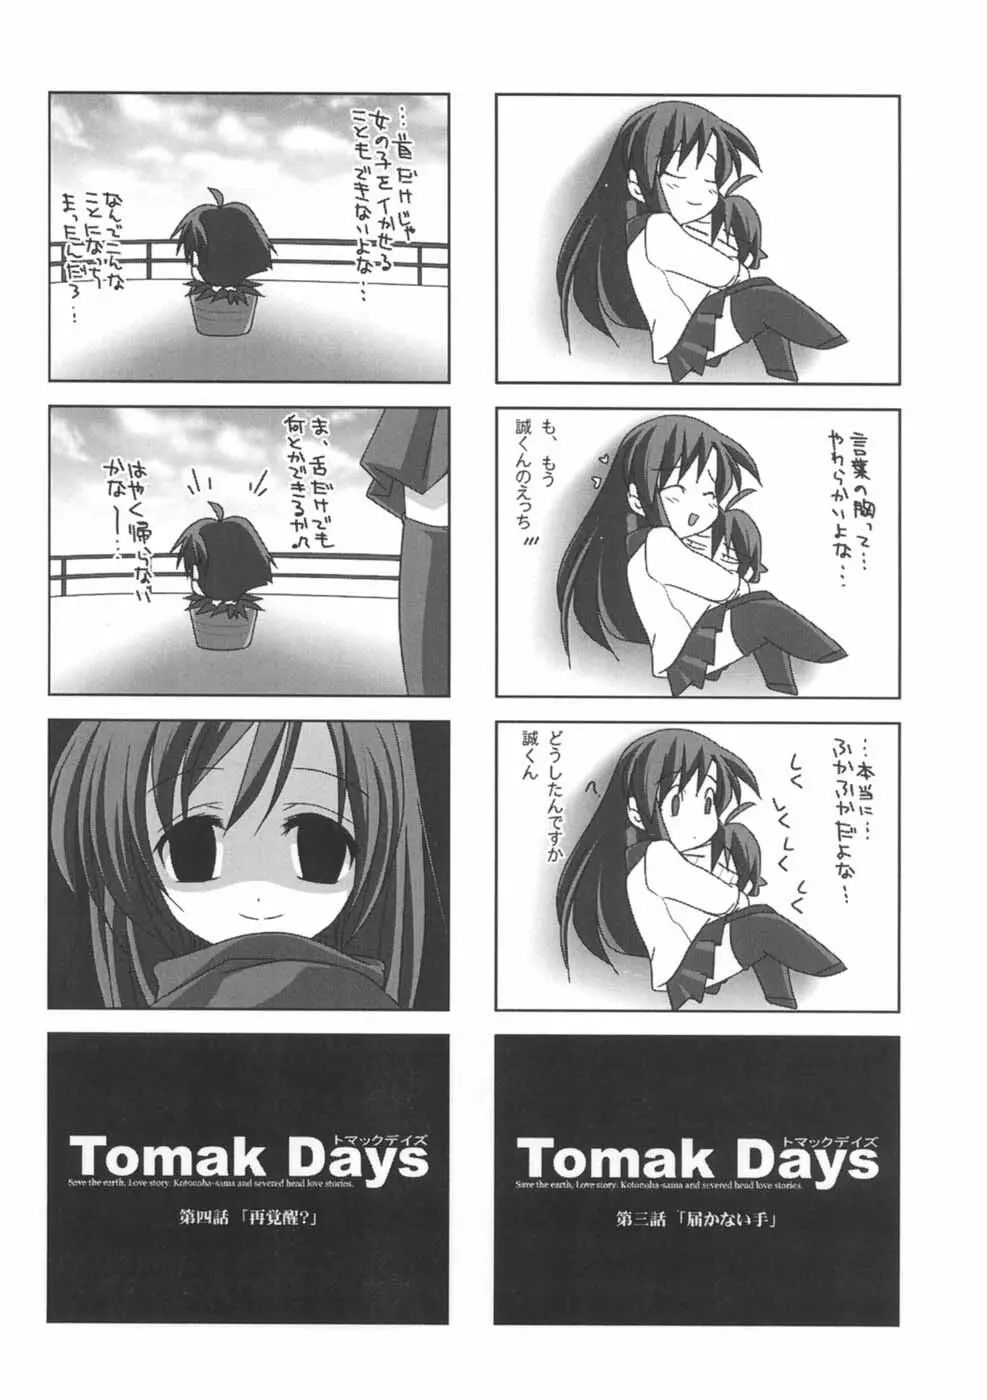 Tomak Days - page4